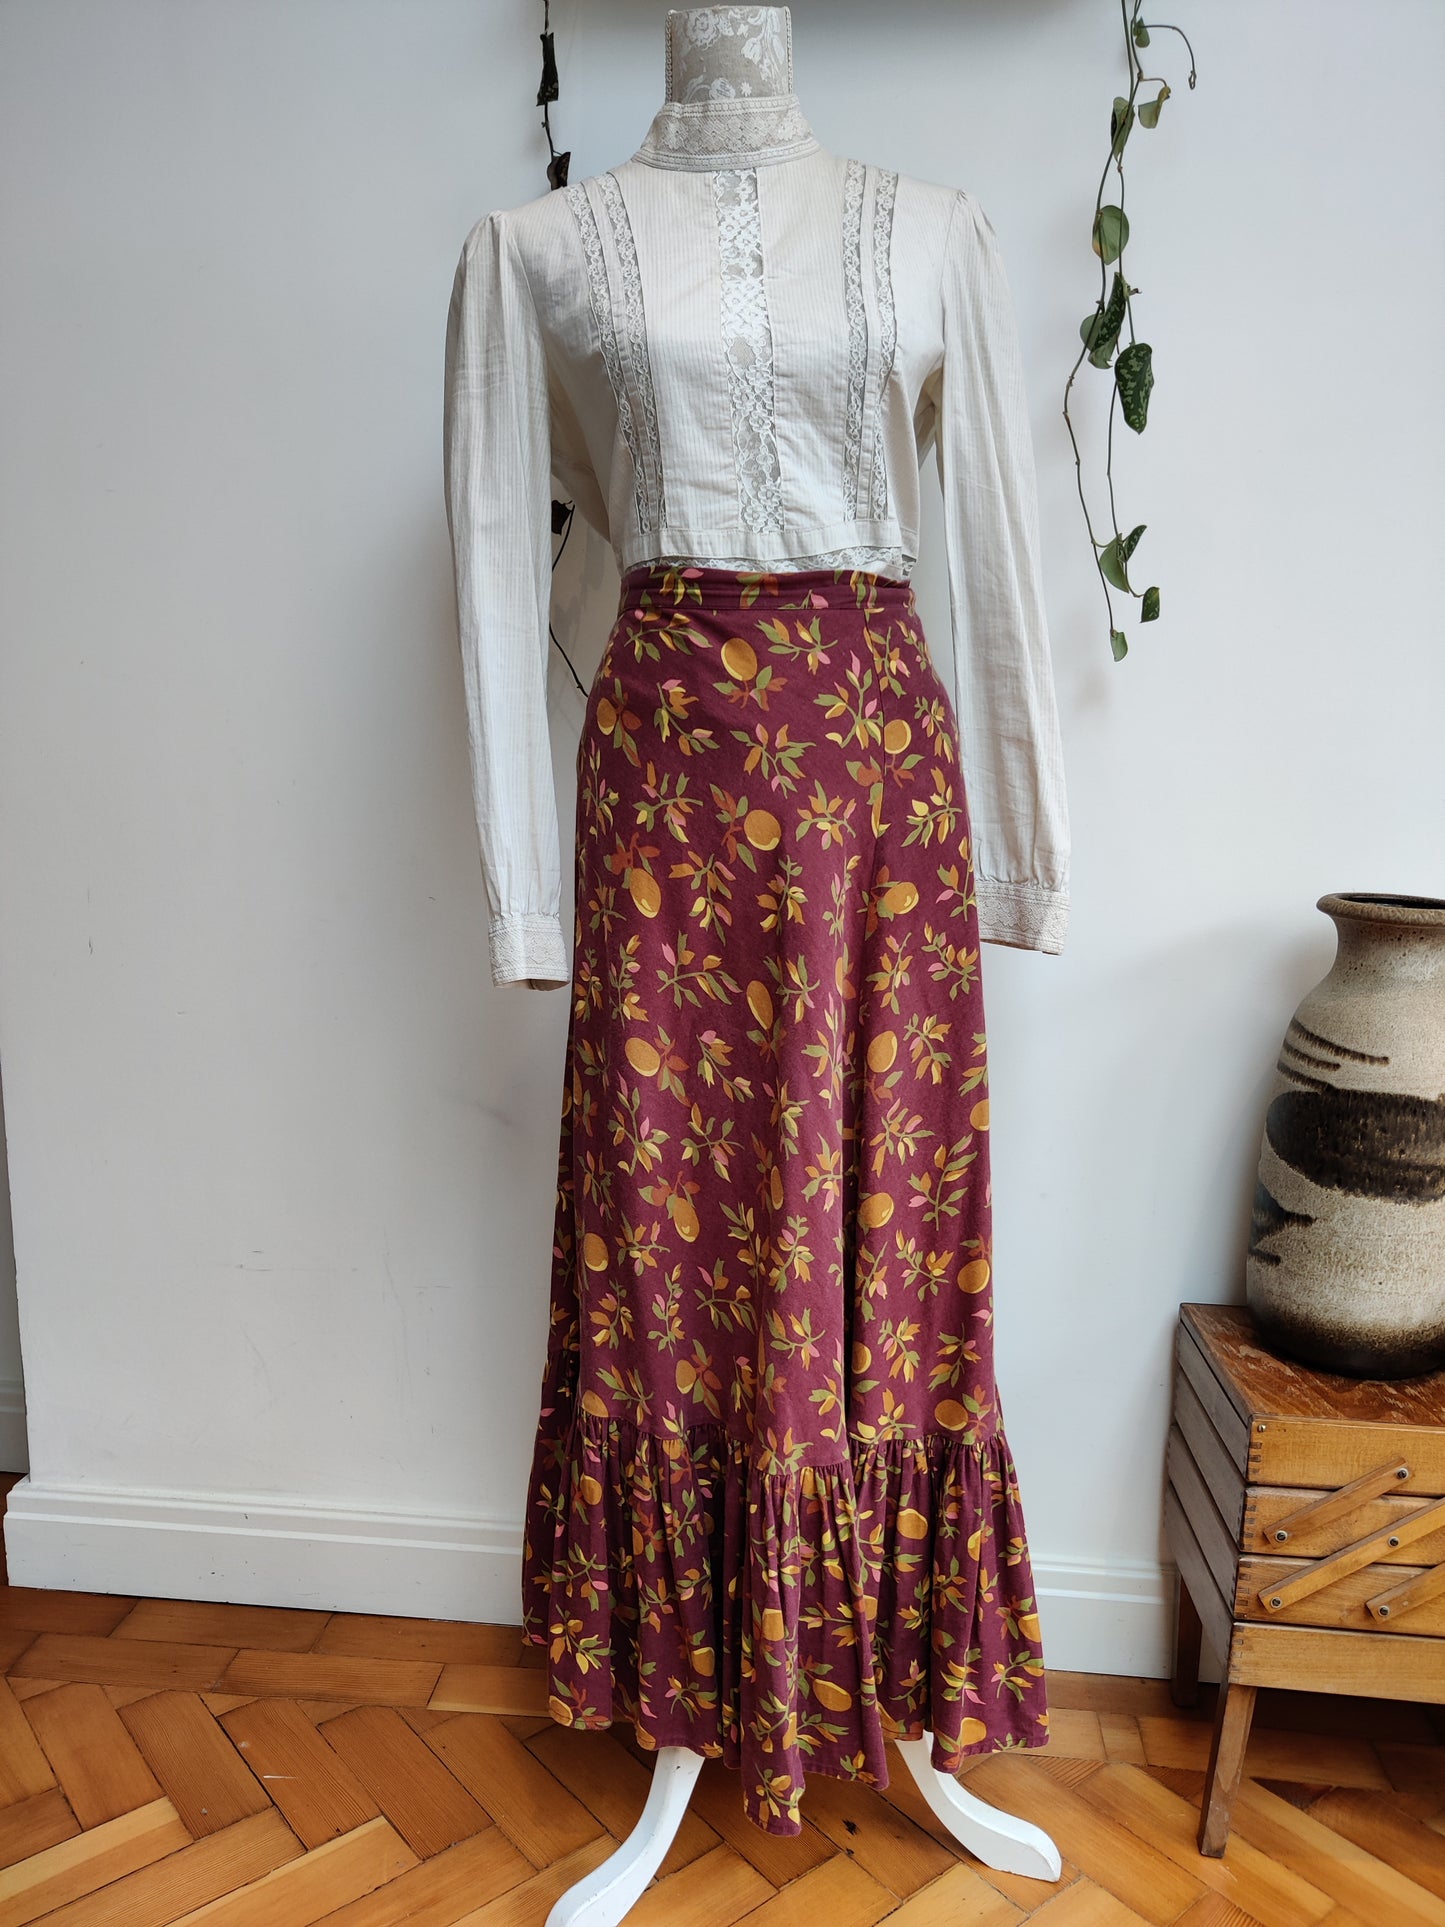 Stunning Laura Ashley Archive prairie skirt. Size 16.